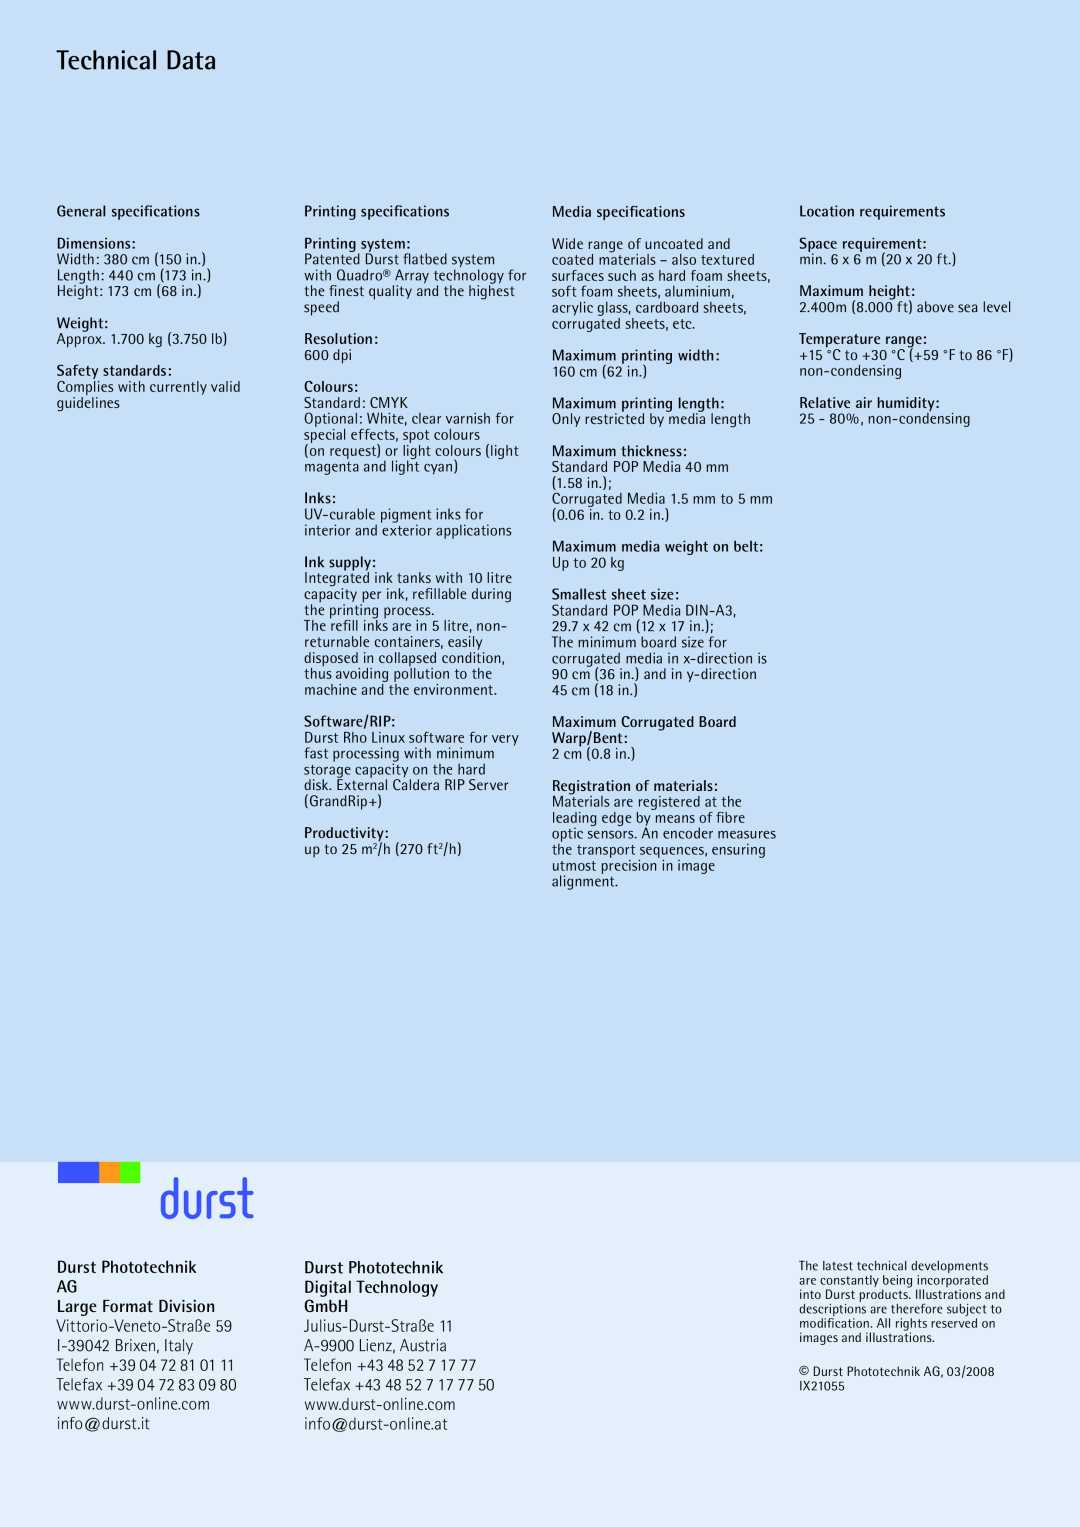 Durst 160 Technical Data, Durst Phototechnik, Digital Technology, Large Format Division, GmbH, Vittorio-Veneto-Straße 